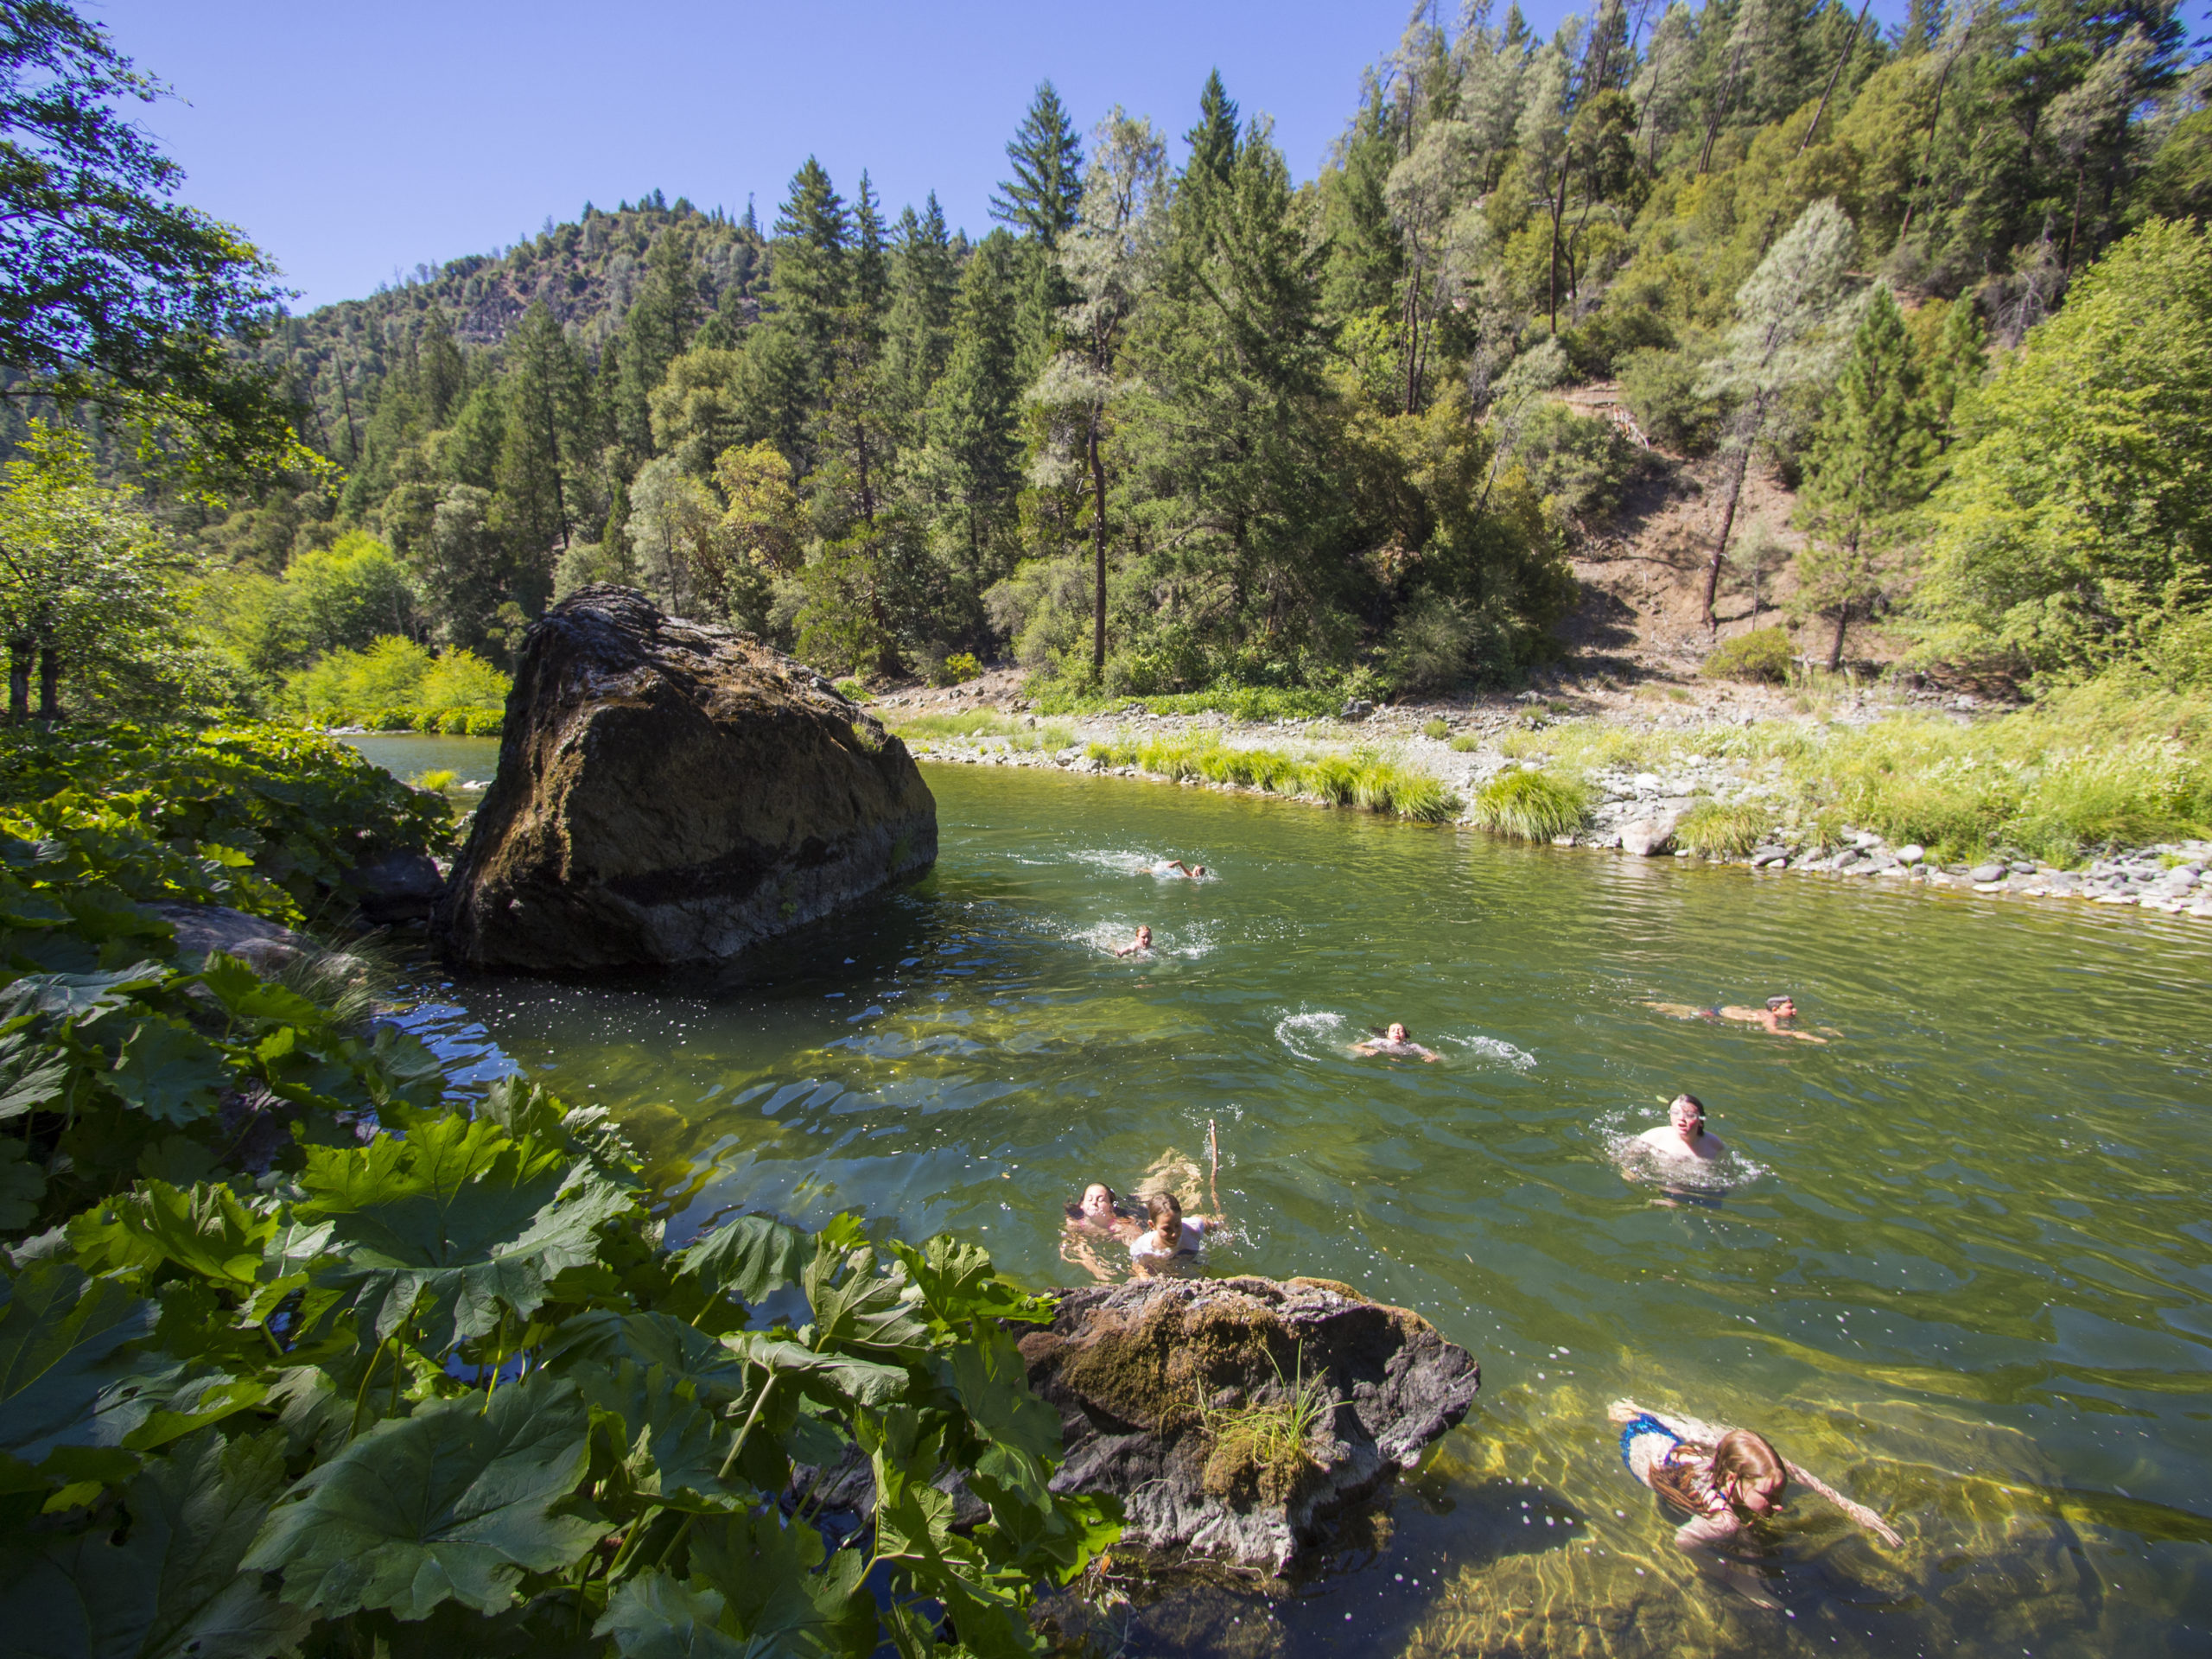 Campers swim in Hayfork Creek